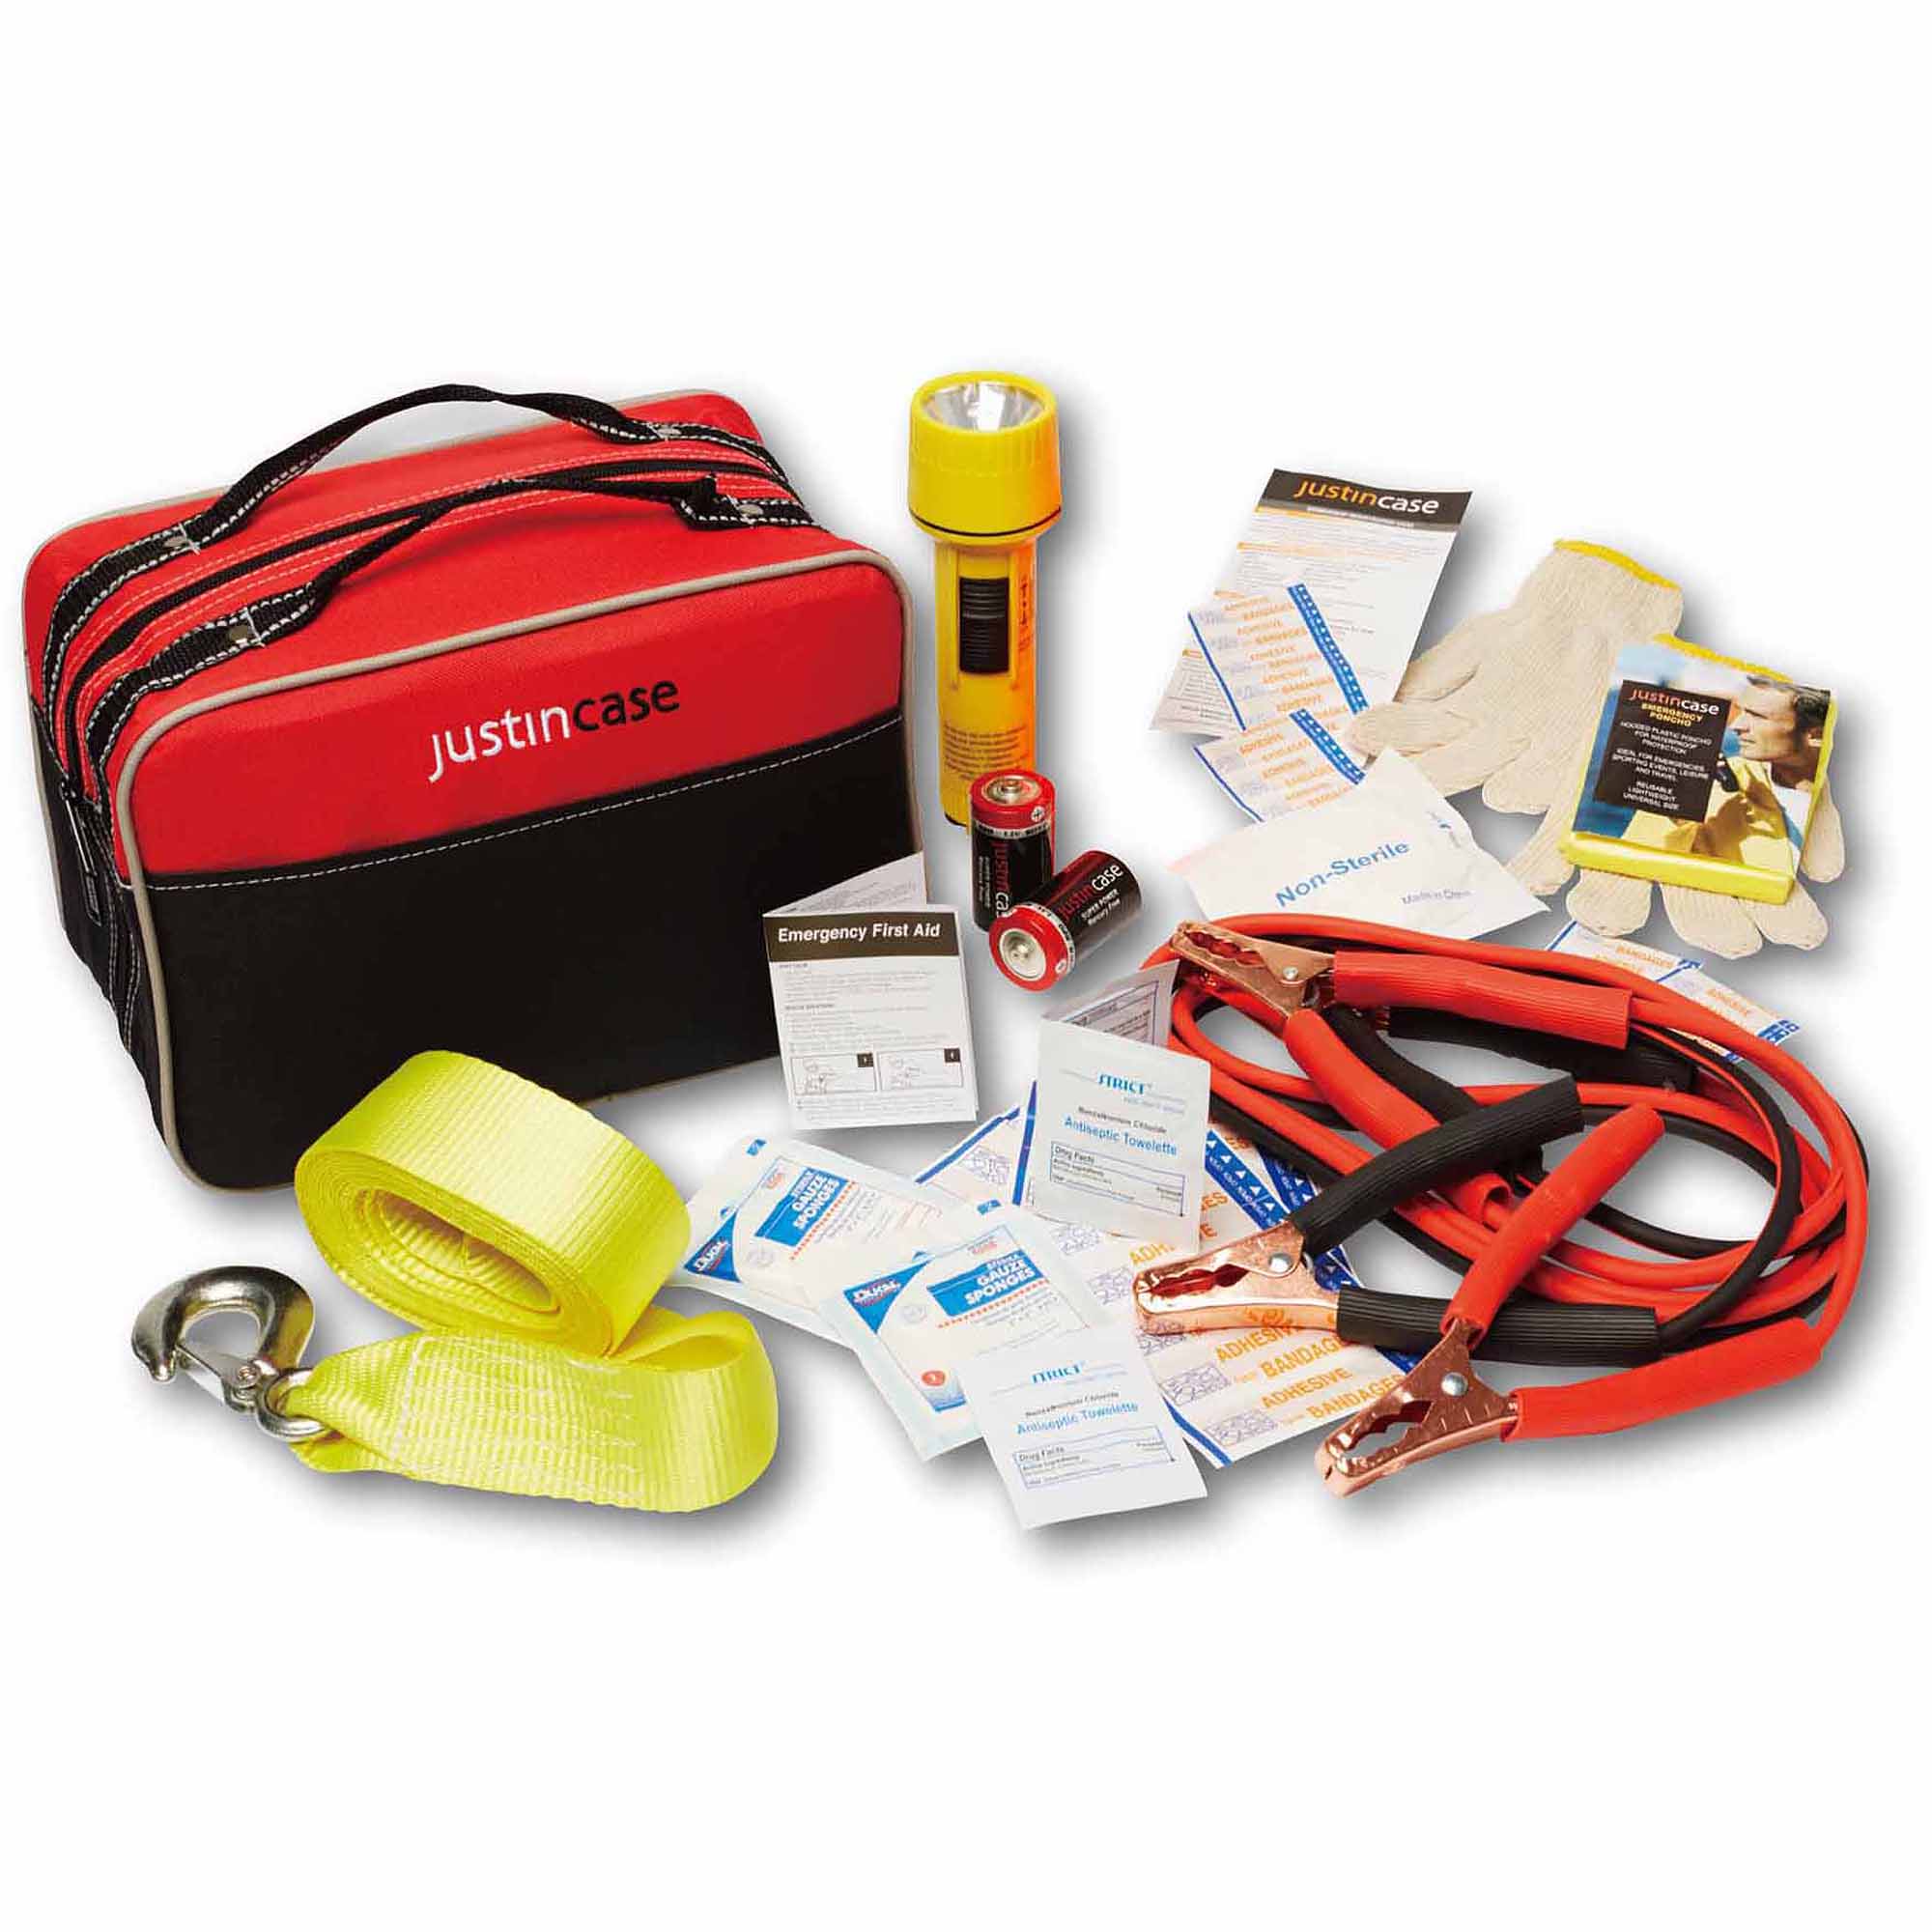 Justin Case Travel Pro Auto Safety Kit $10.65